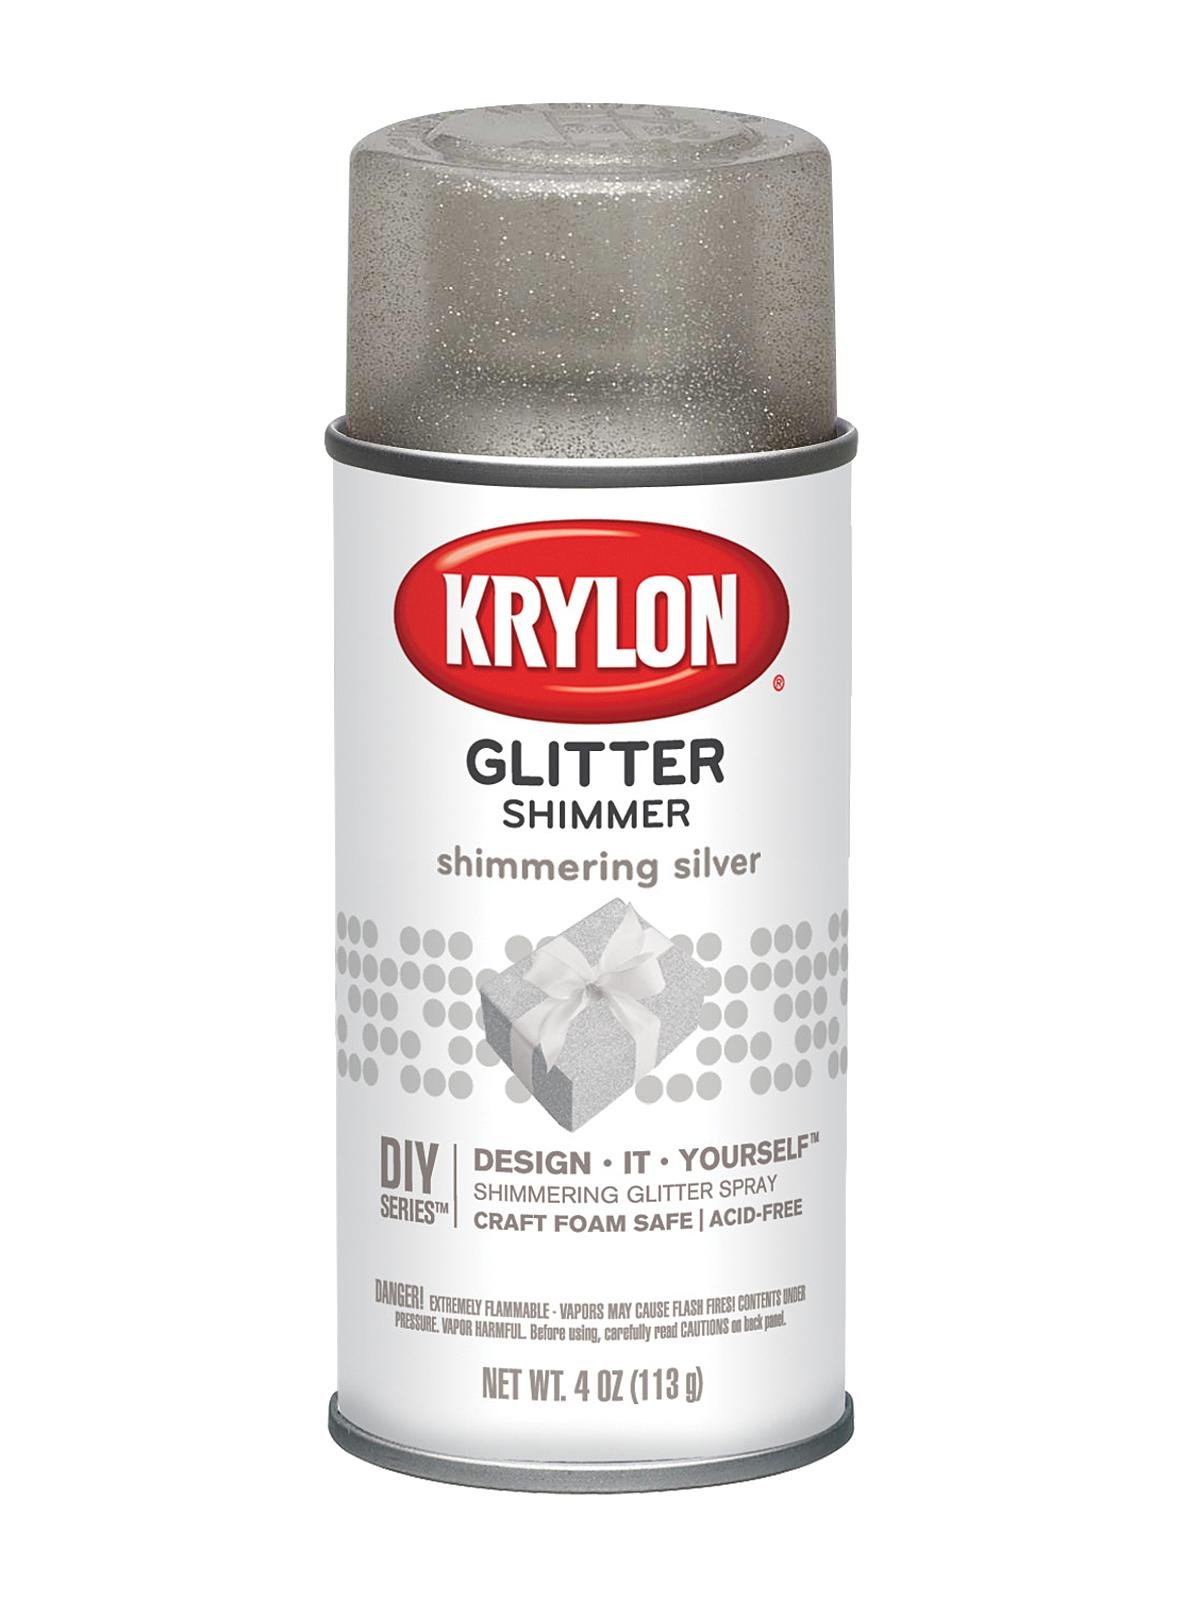 Glitter spray paint!!!  Glitter spray paint, Glitter spray, Krylon glitter  blast